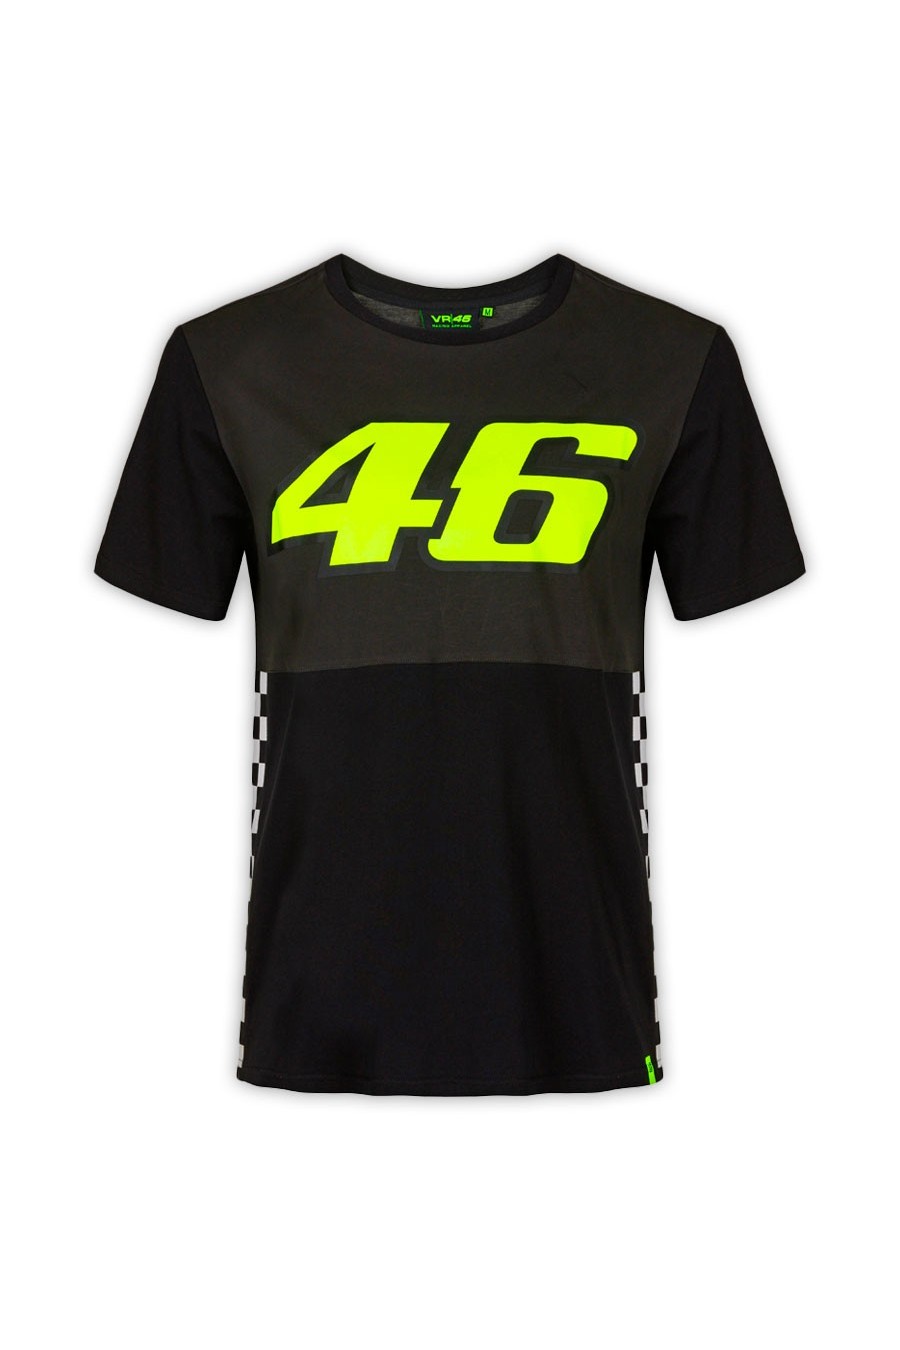 Valentino Rossi 46 Renn-T-Shirt